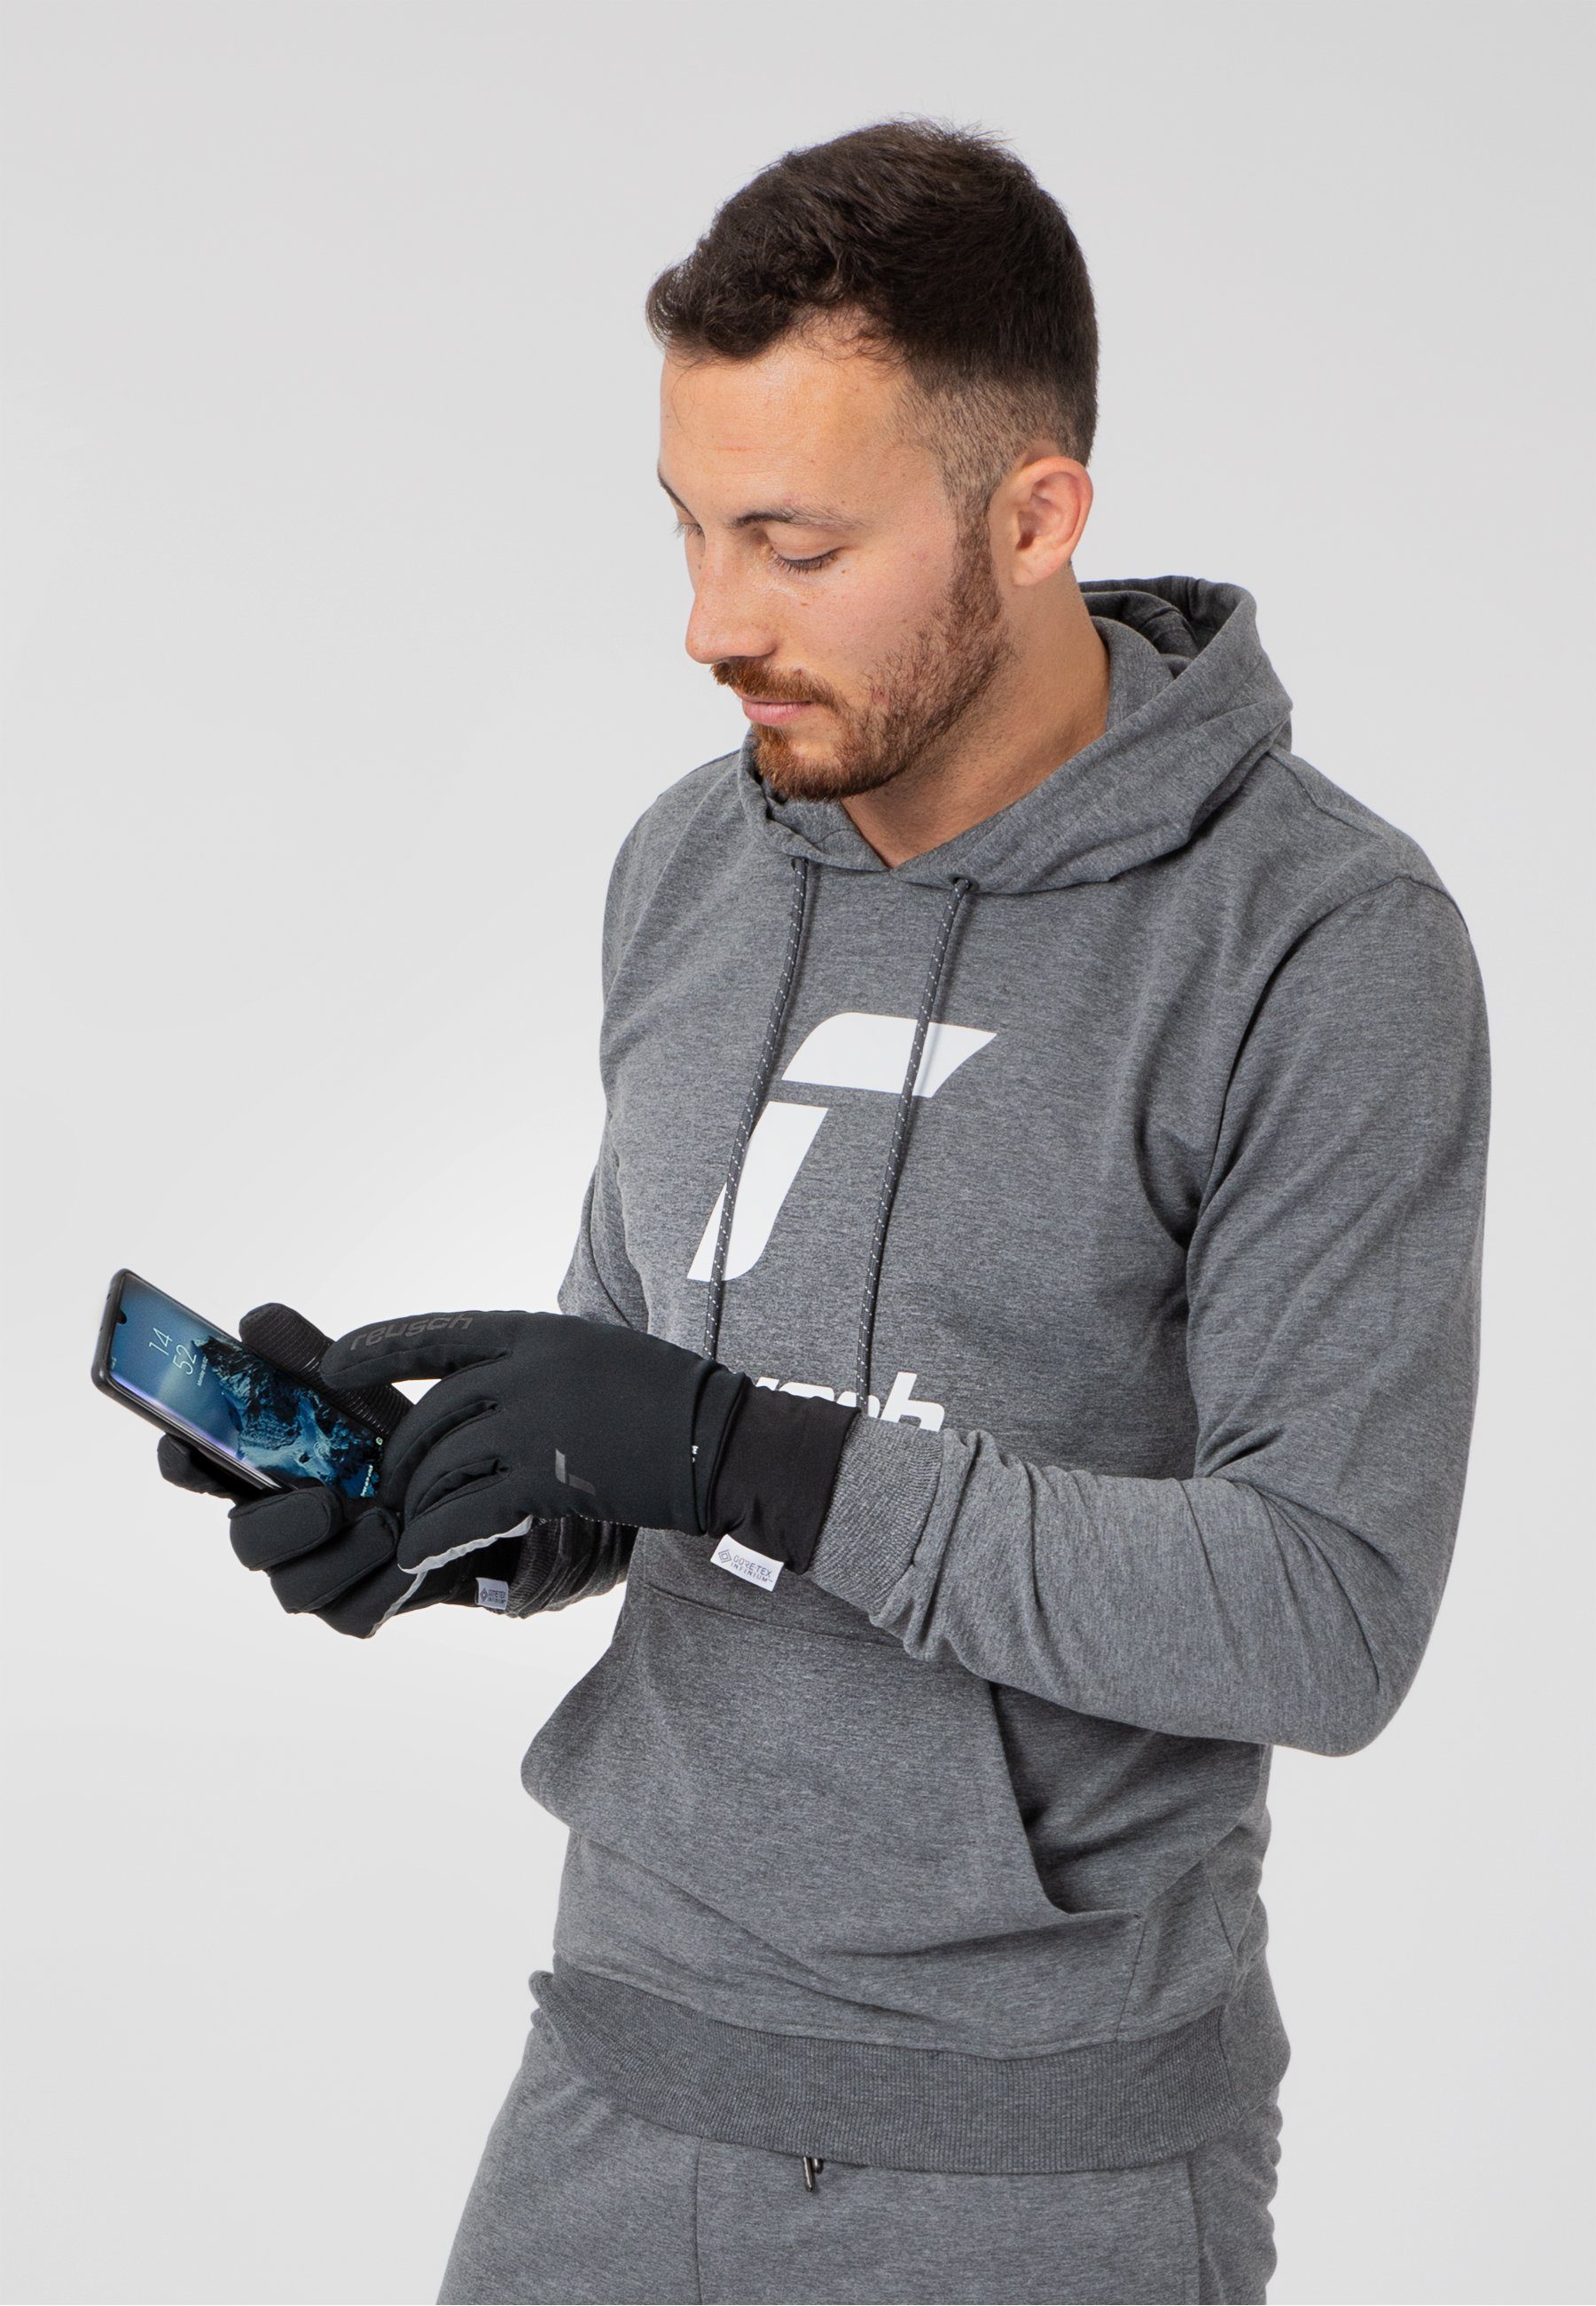 Reusch Laufhandschuhe Multisport mit Touchscreen-Funktion Glove GORE-TEX INFINIUM